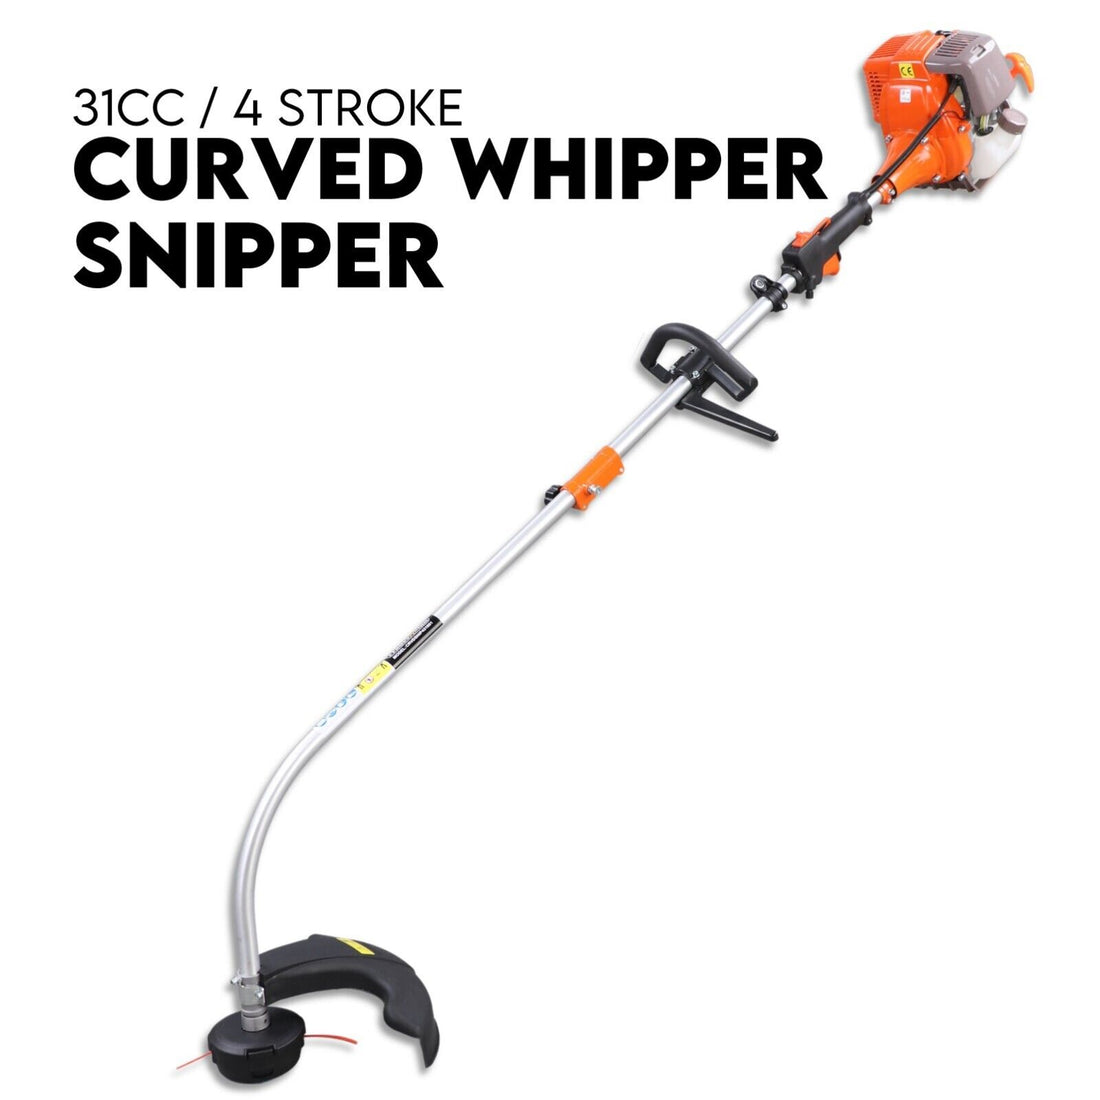 Whipper Snipper Curved Split Shaft 31cc